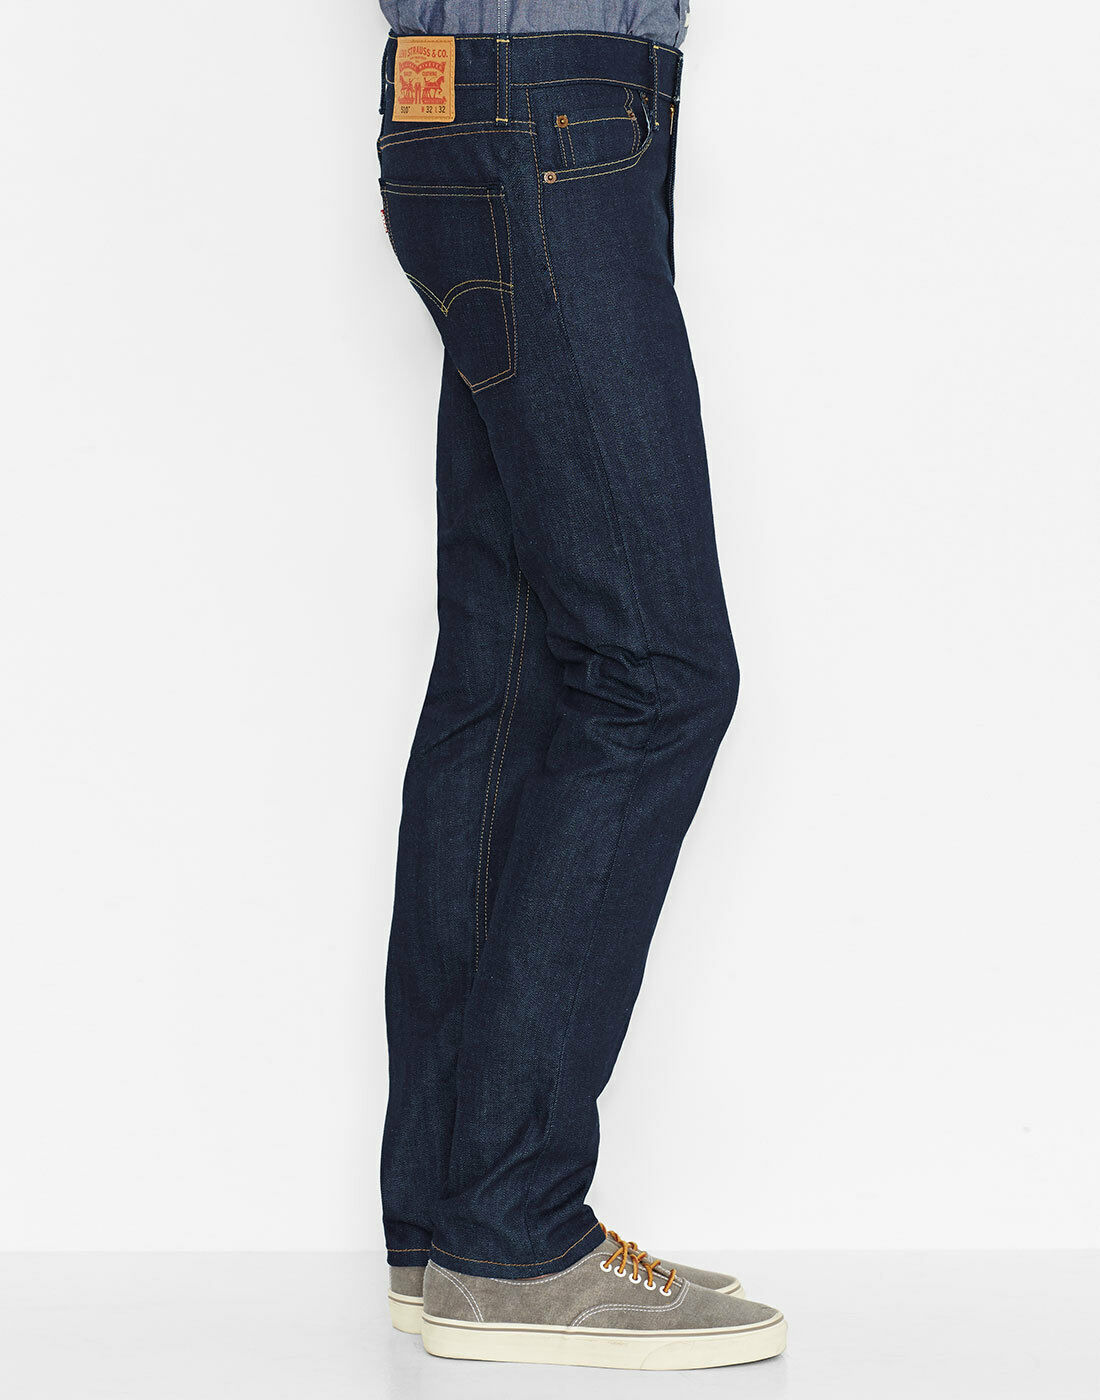 Levis 510 Slim Tapered Jeans Indigo Blue Advanced Stretch Range Brand New  Levi's | eBay